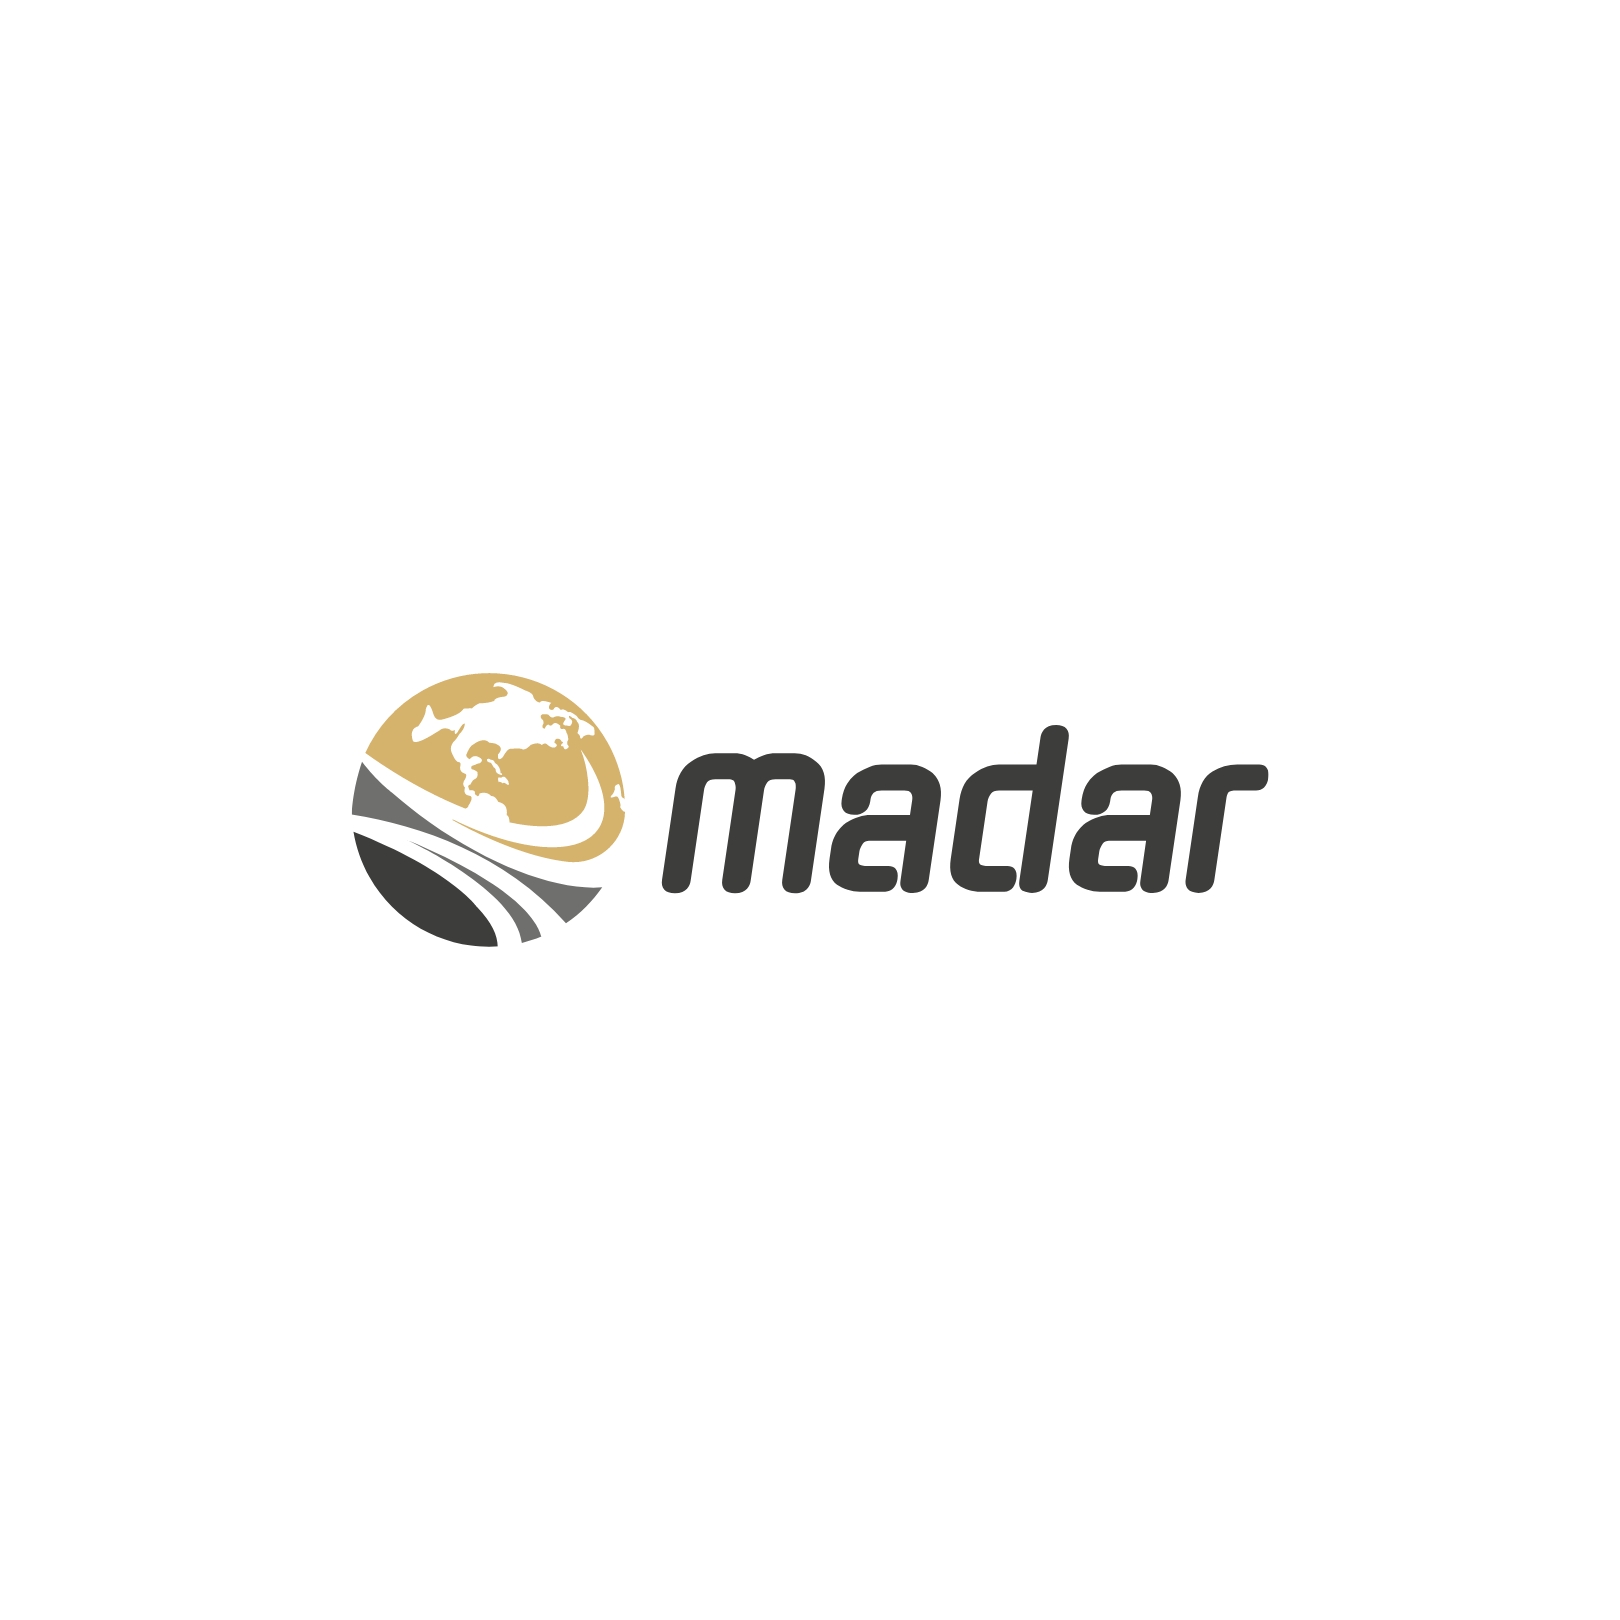 Designing a logo and full branding for Madar Export